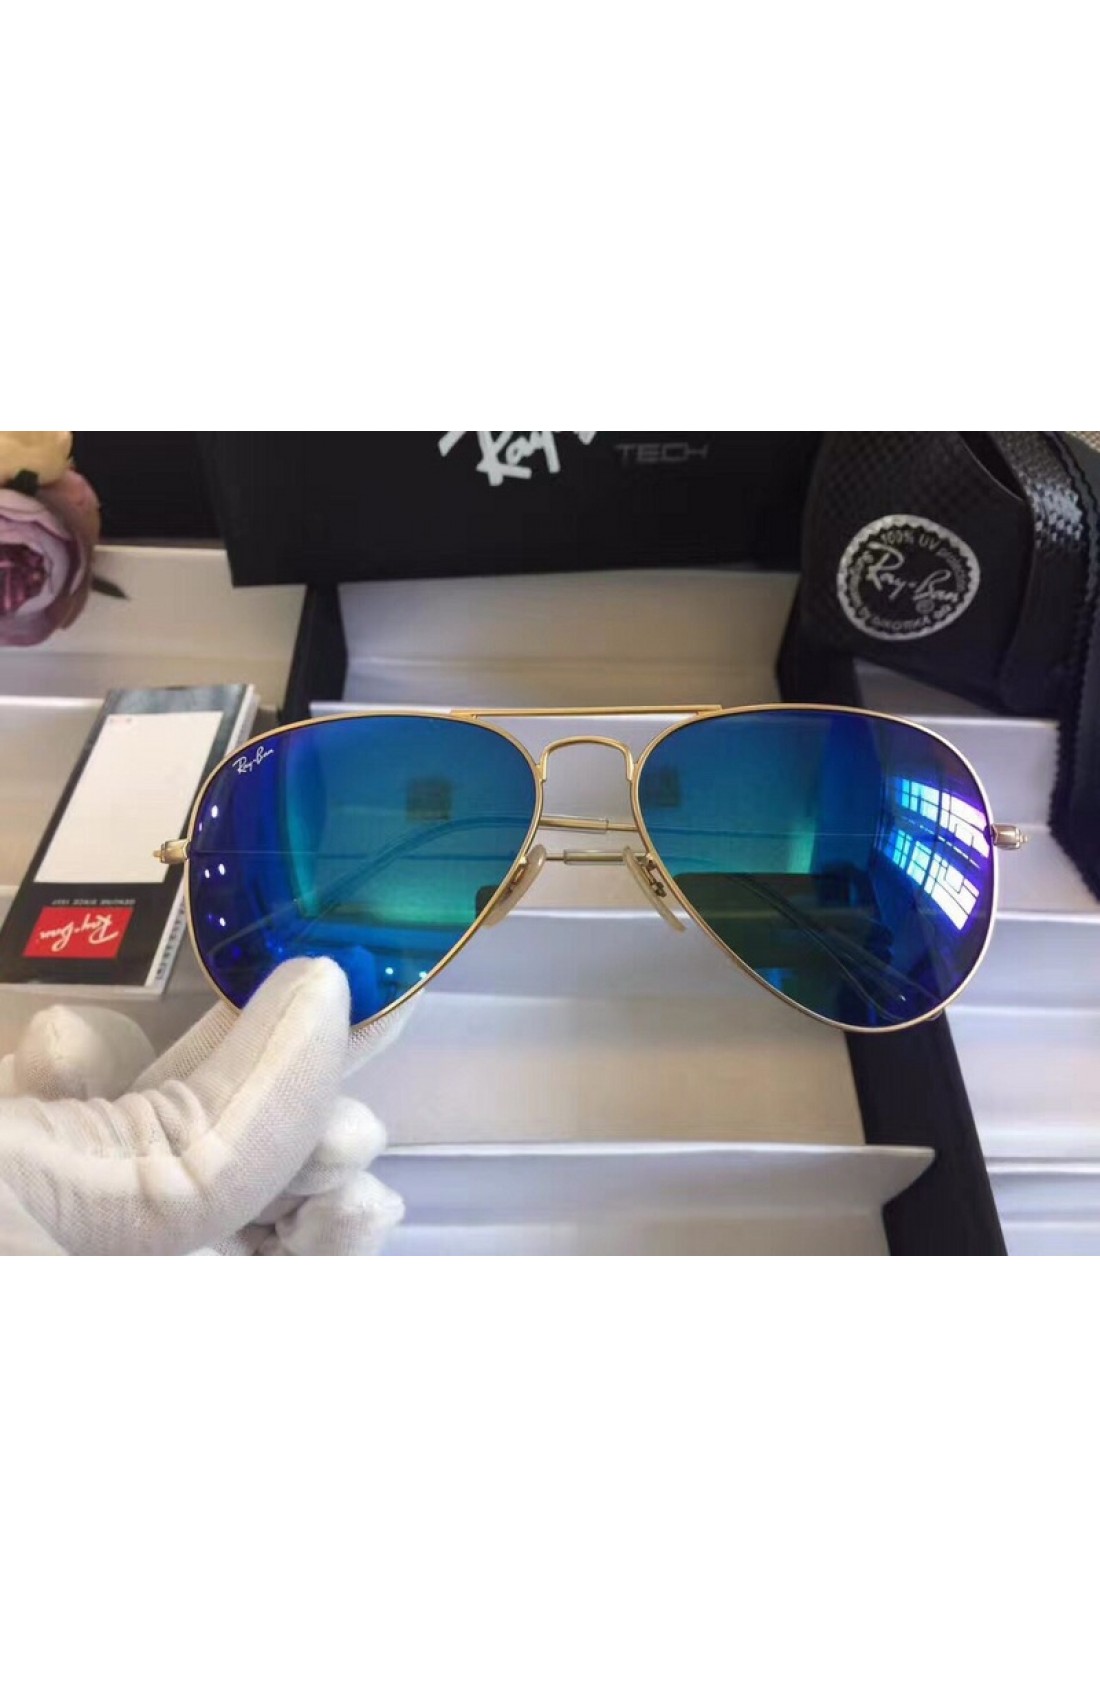 ray ban sunglasses blue lens \u003e Up to 79 